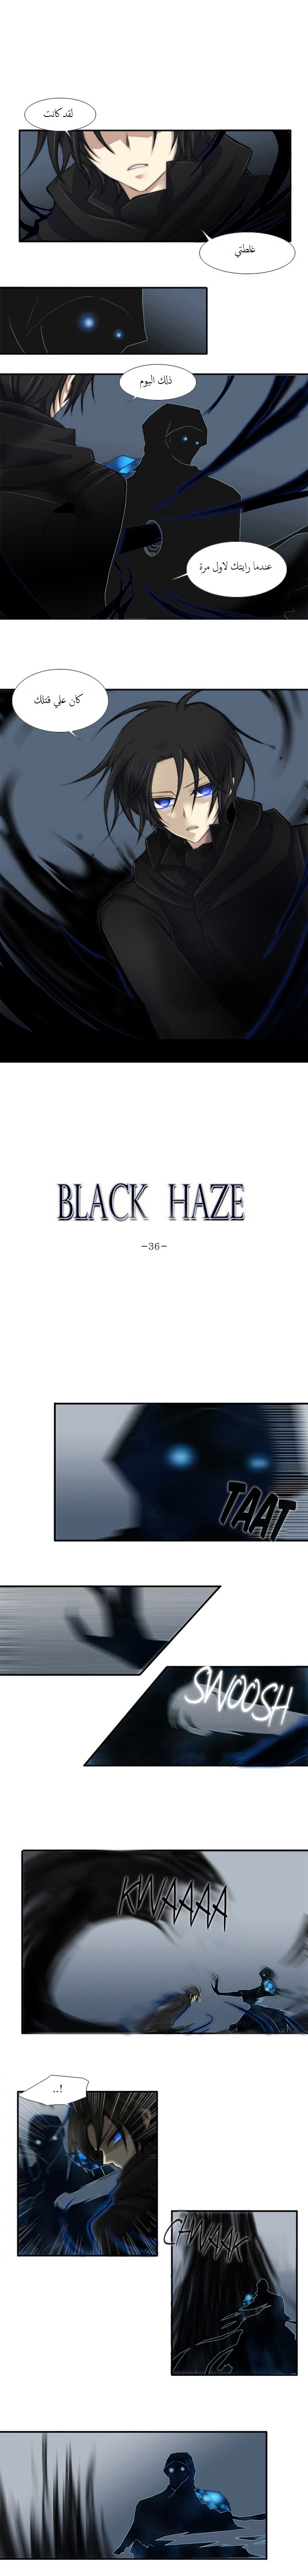 Black Haze: Chapter 36 - Page 1